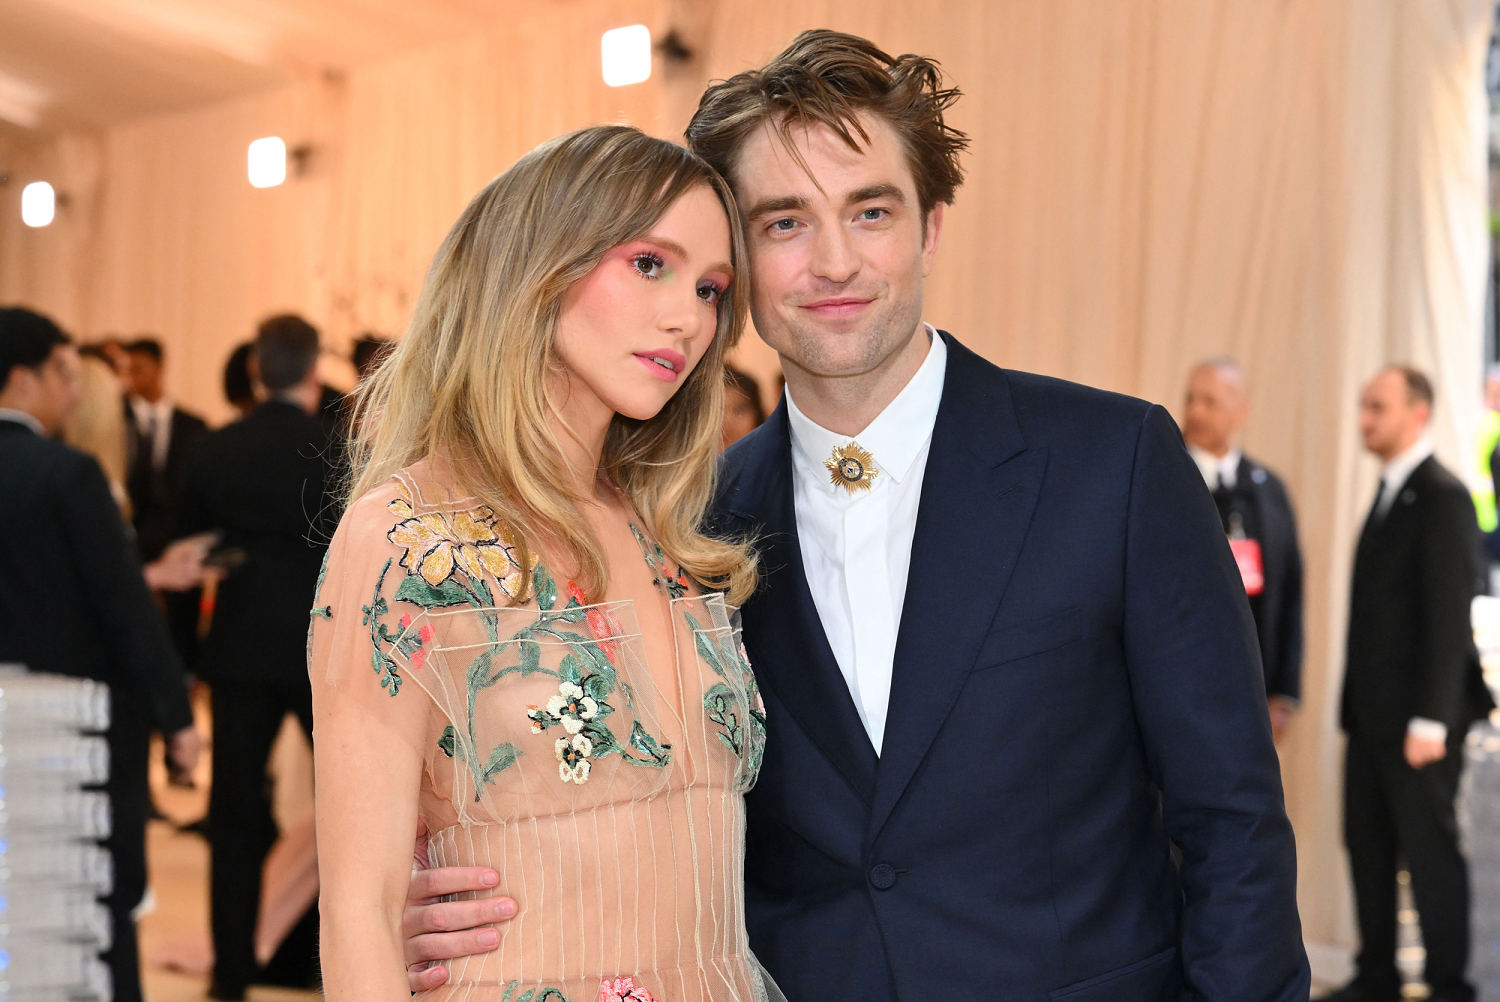 Suki Waterhouse, longtime girlfriend of Robert Pattinson, reveals pregnancy during concert